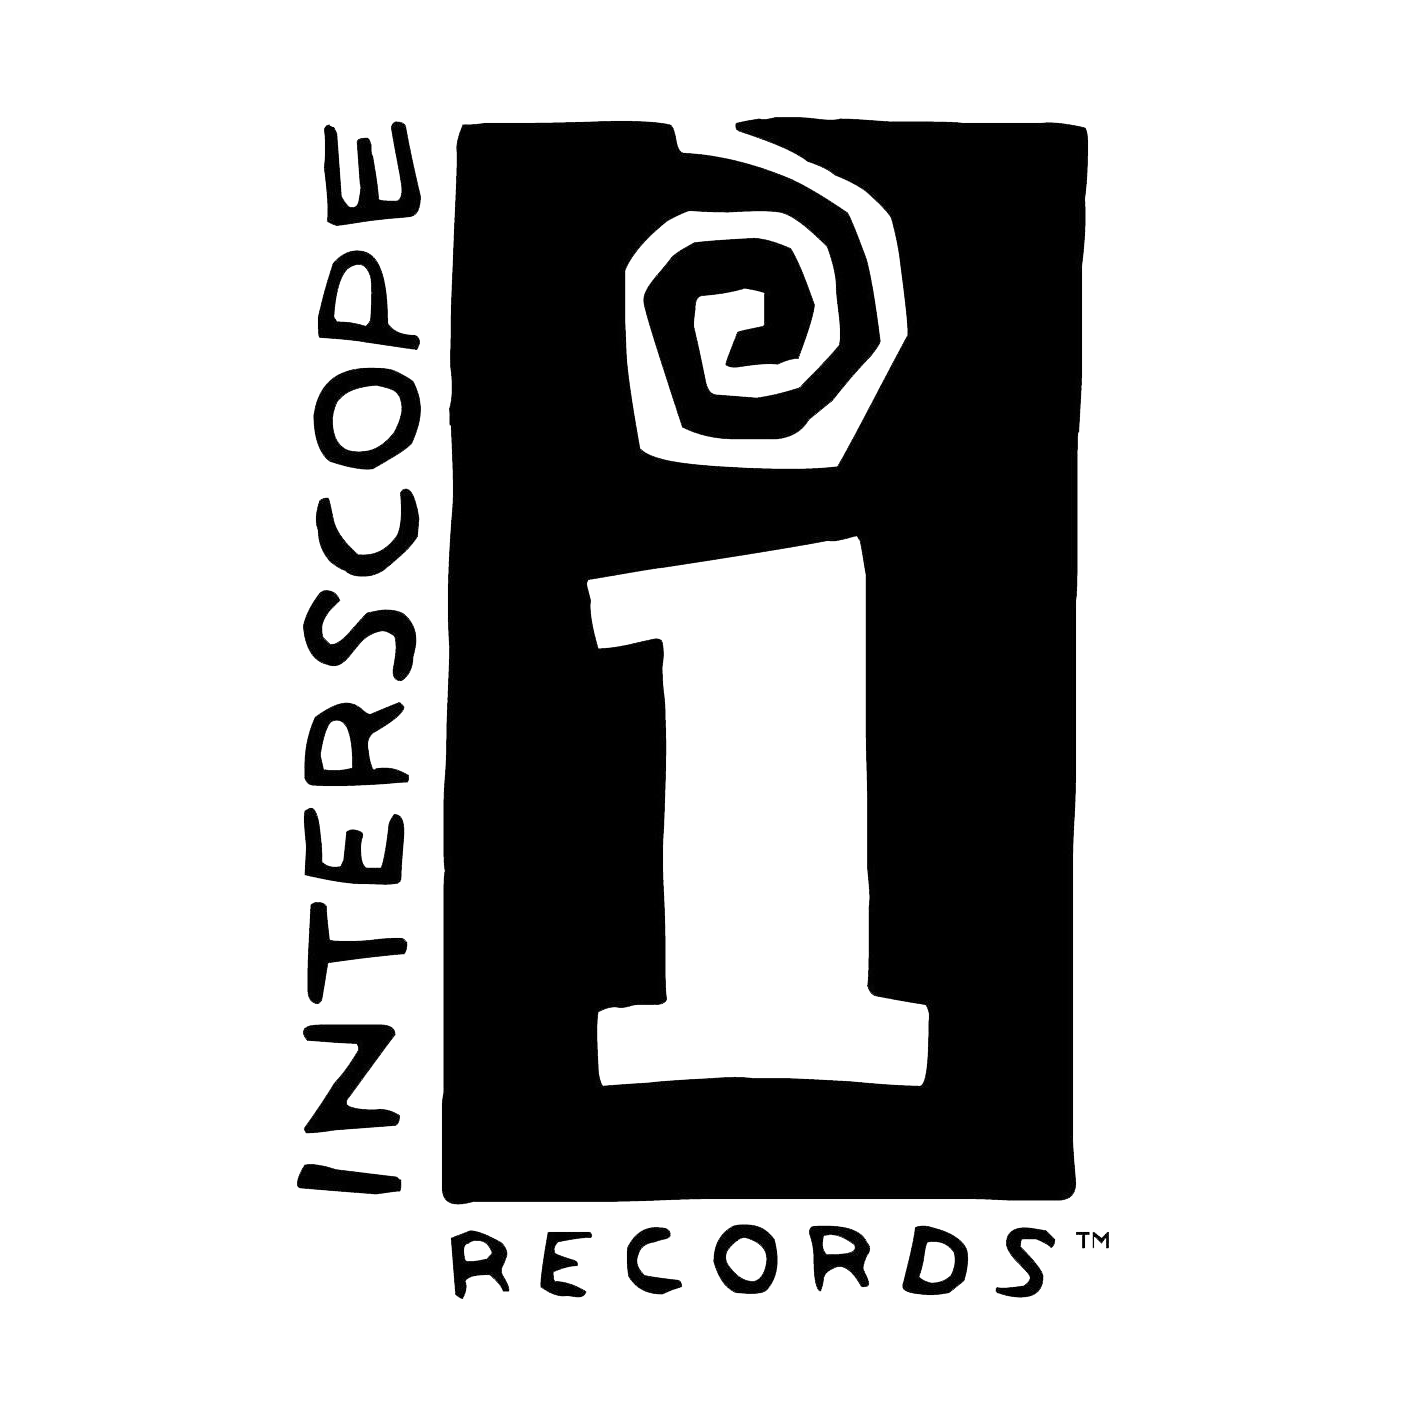 InterScope Records Logo PNG Transparent & SVG Vector - Freebie Supply